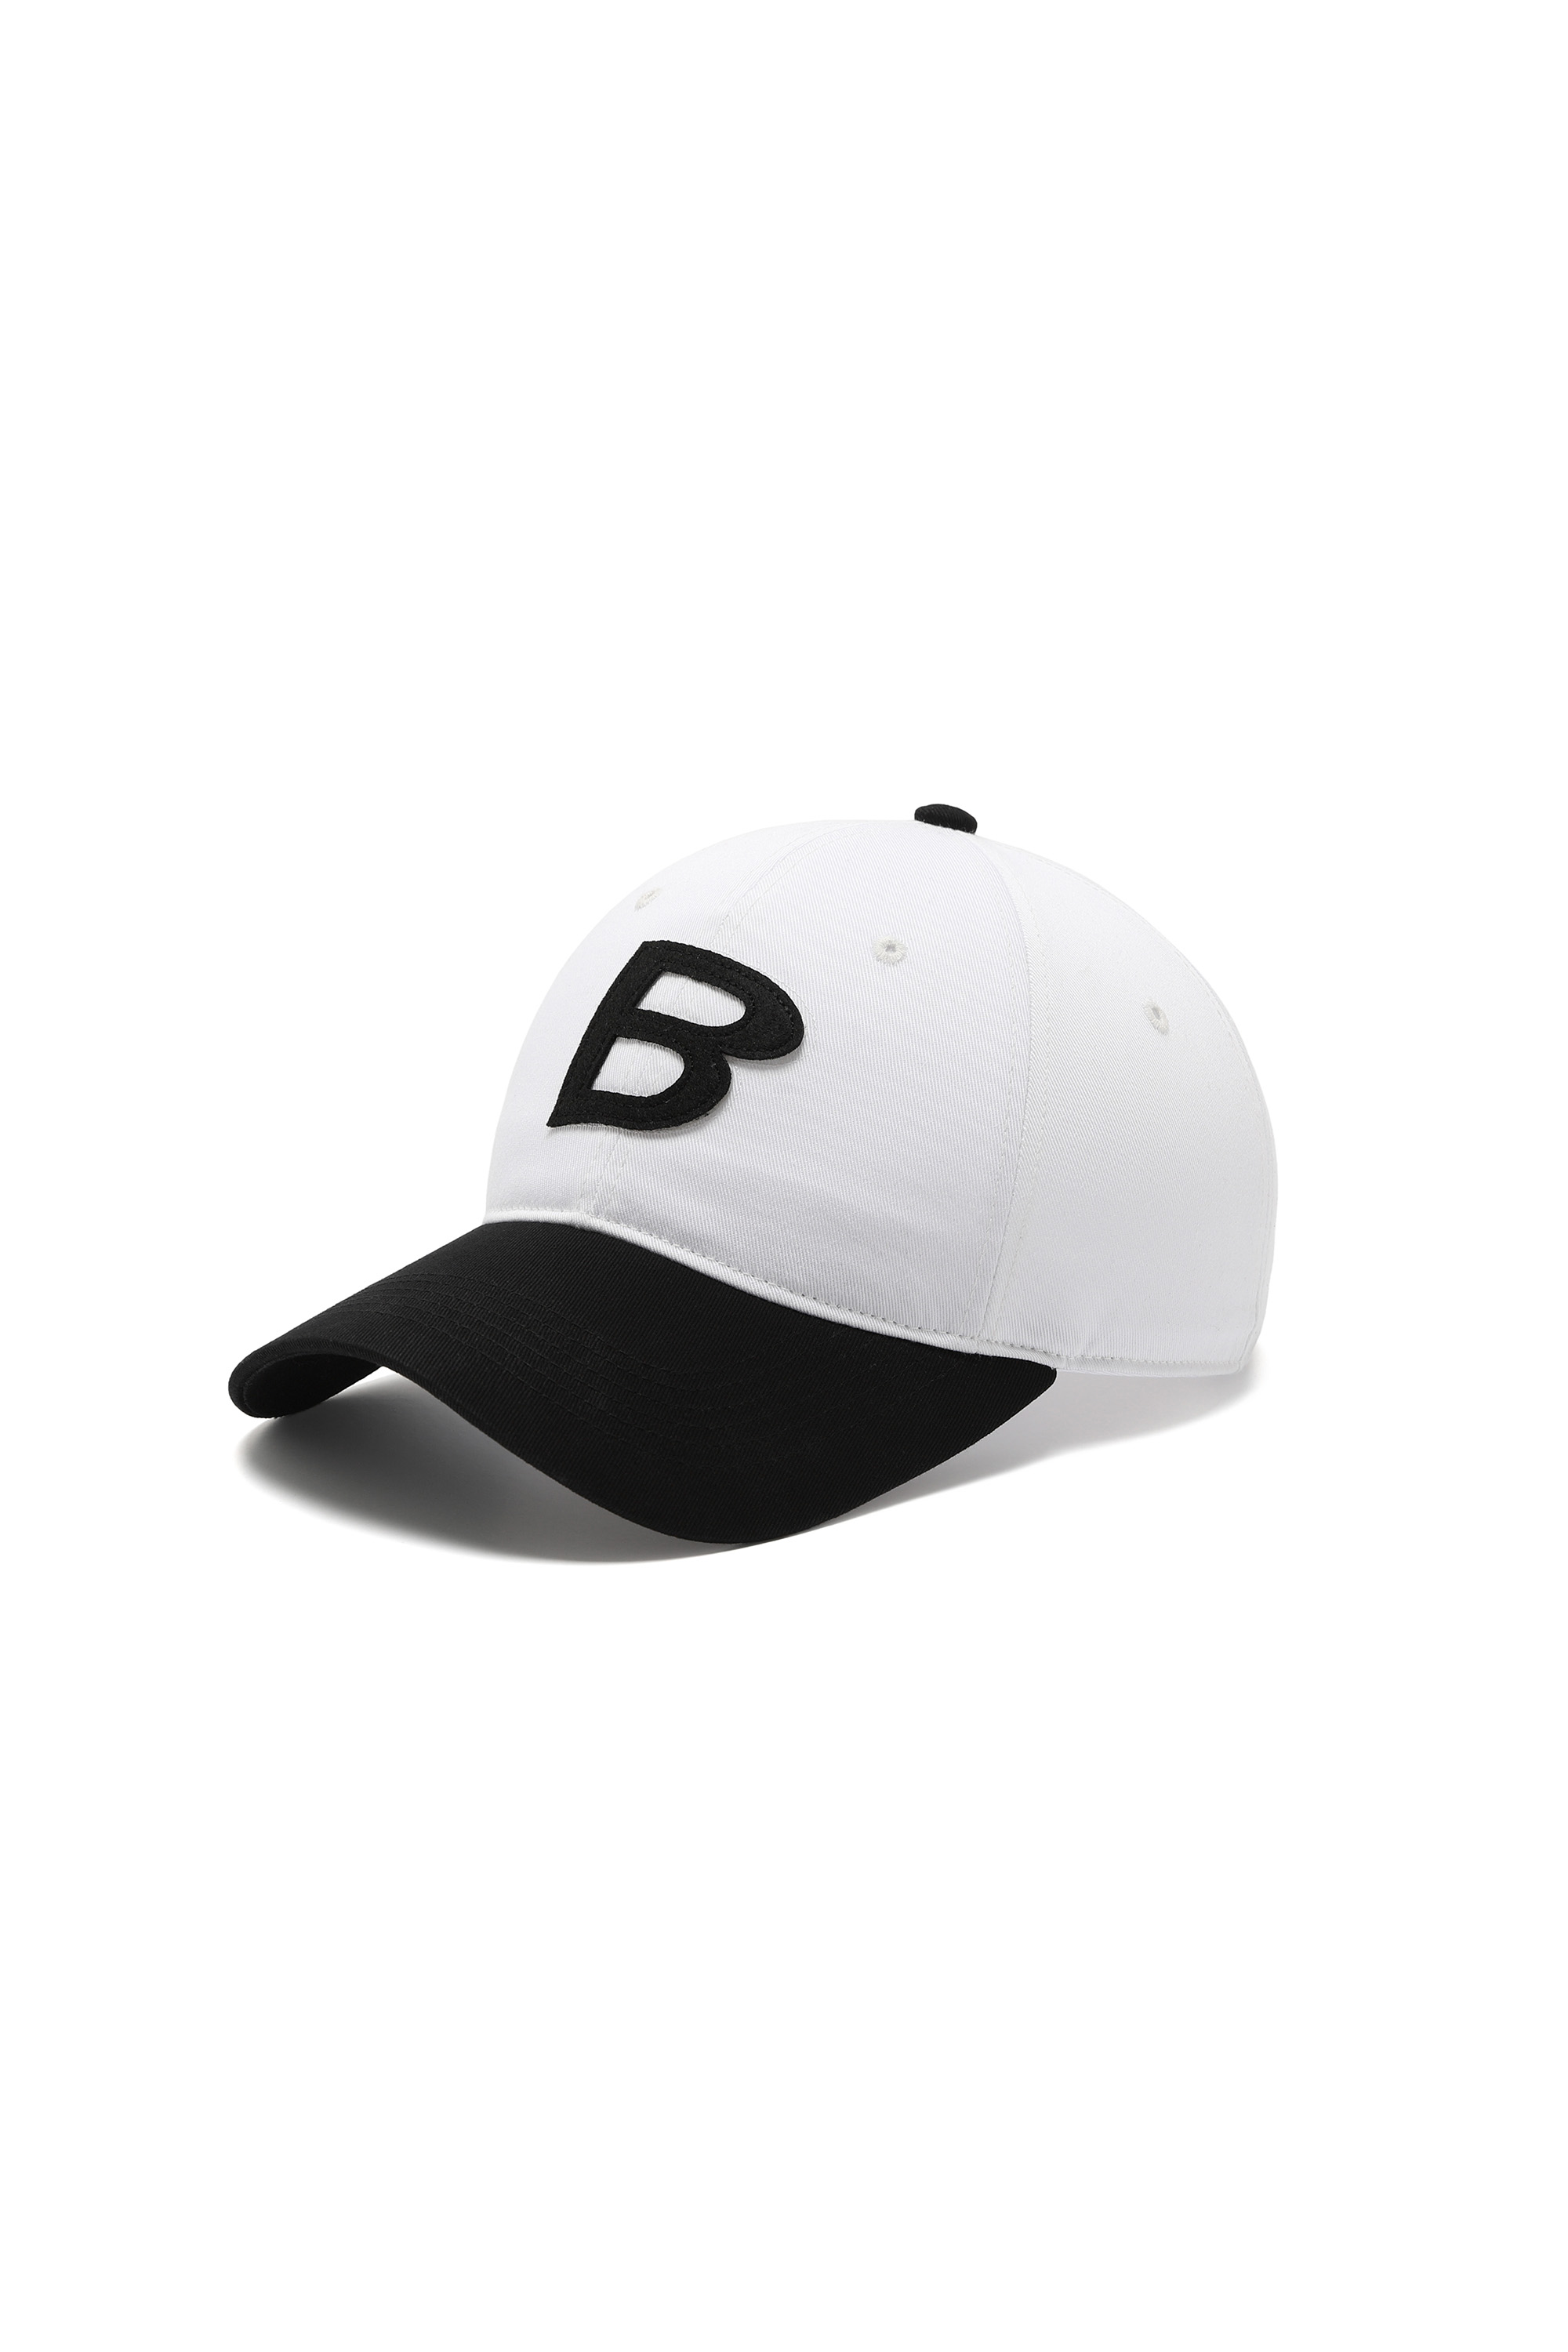 B PATCH COMBI CAP - WHITE BLACK